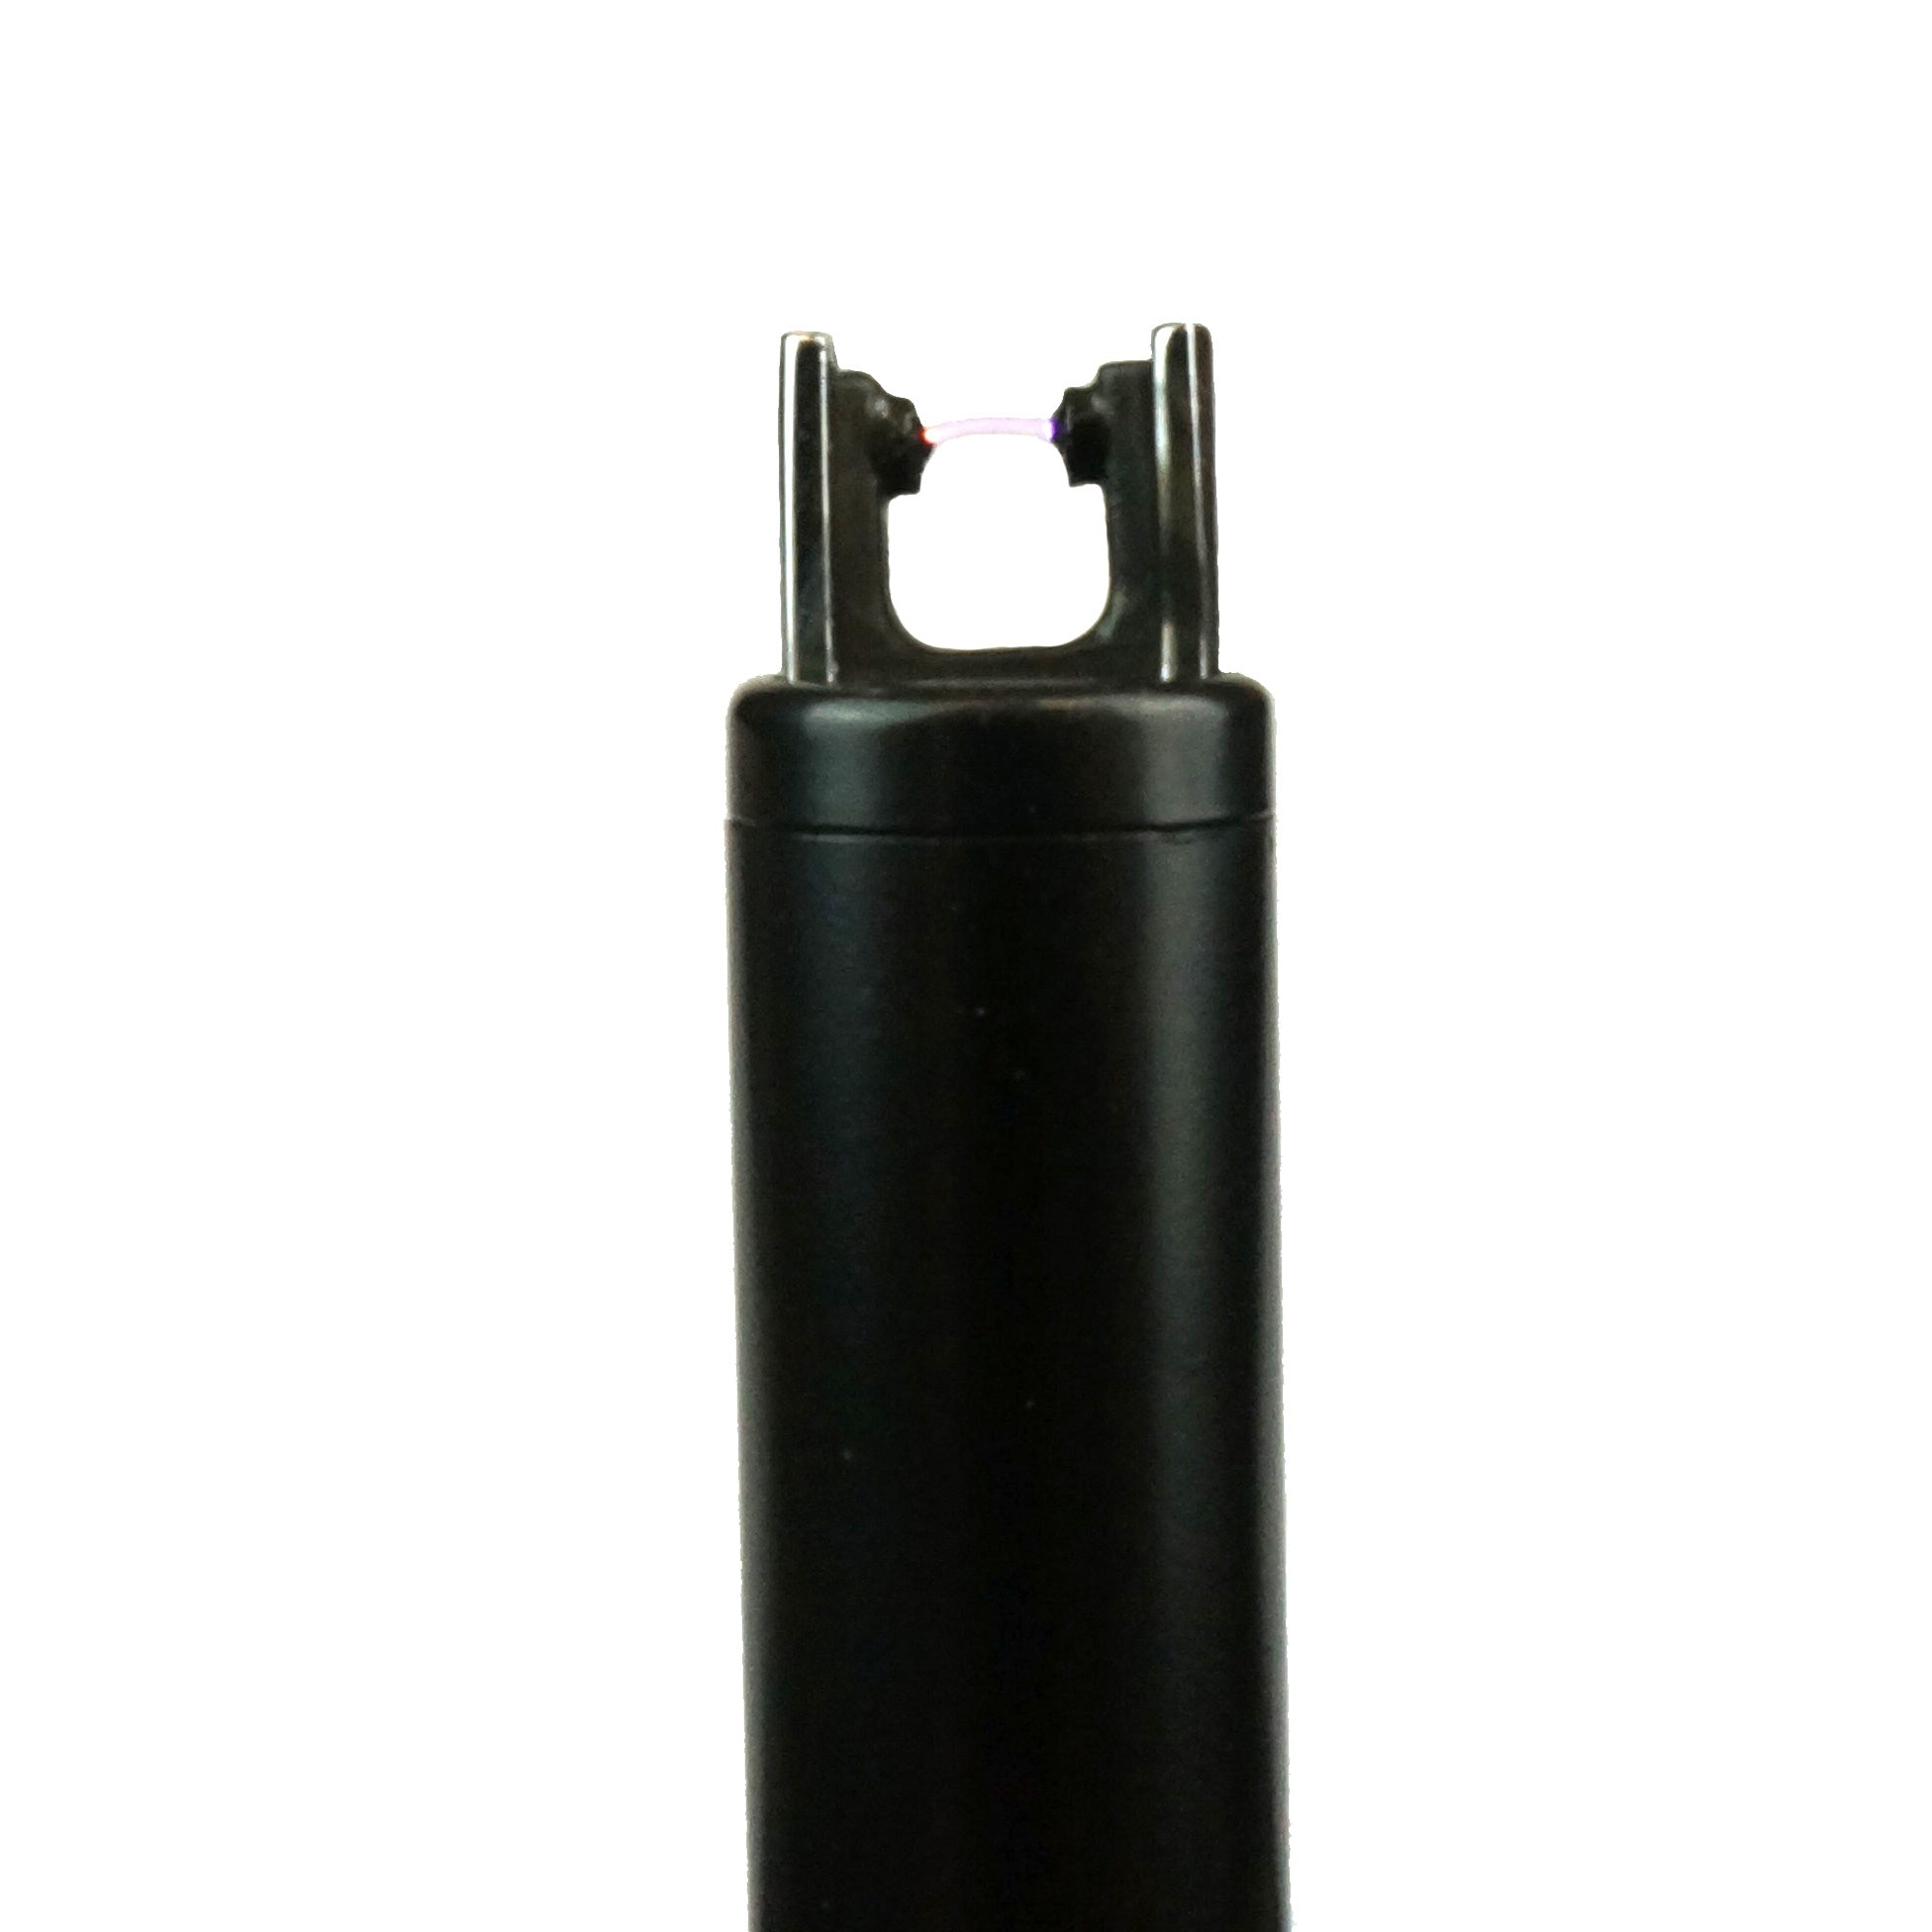 Cello Electric Arc Lighter - Black